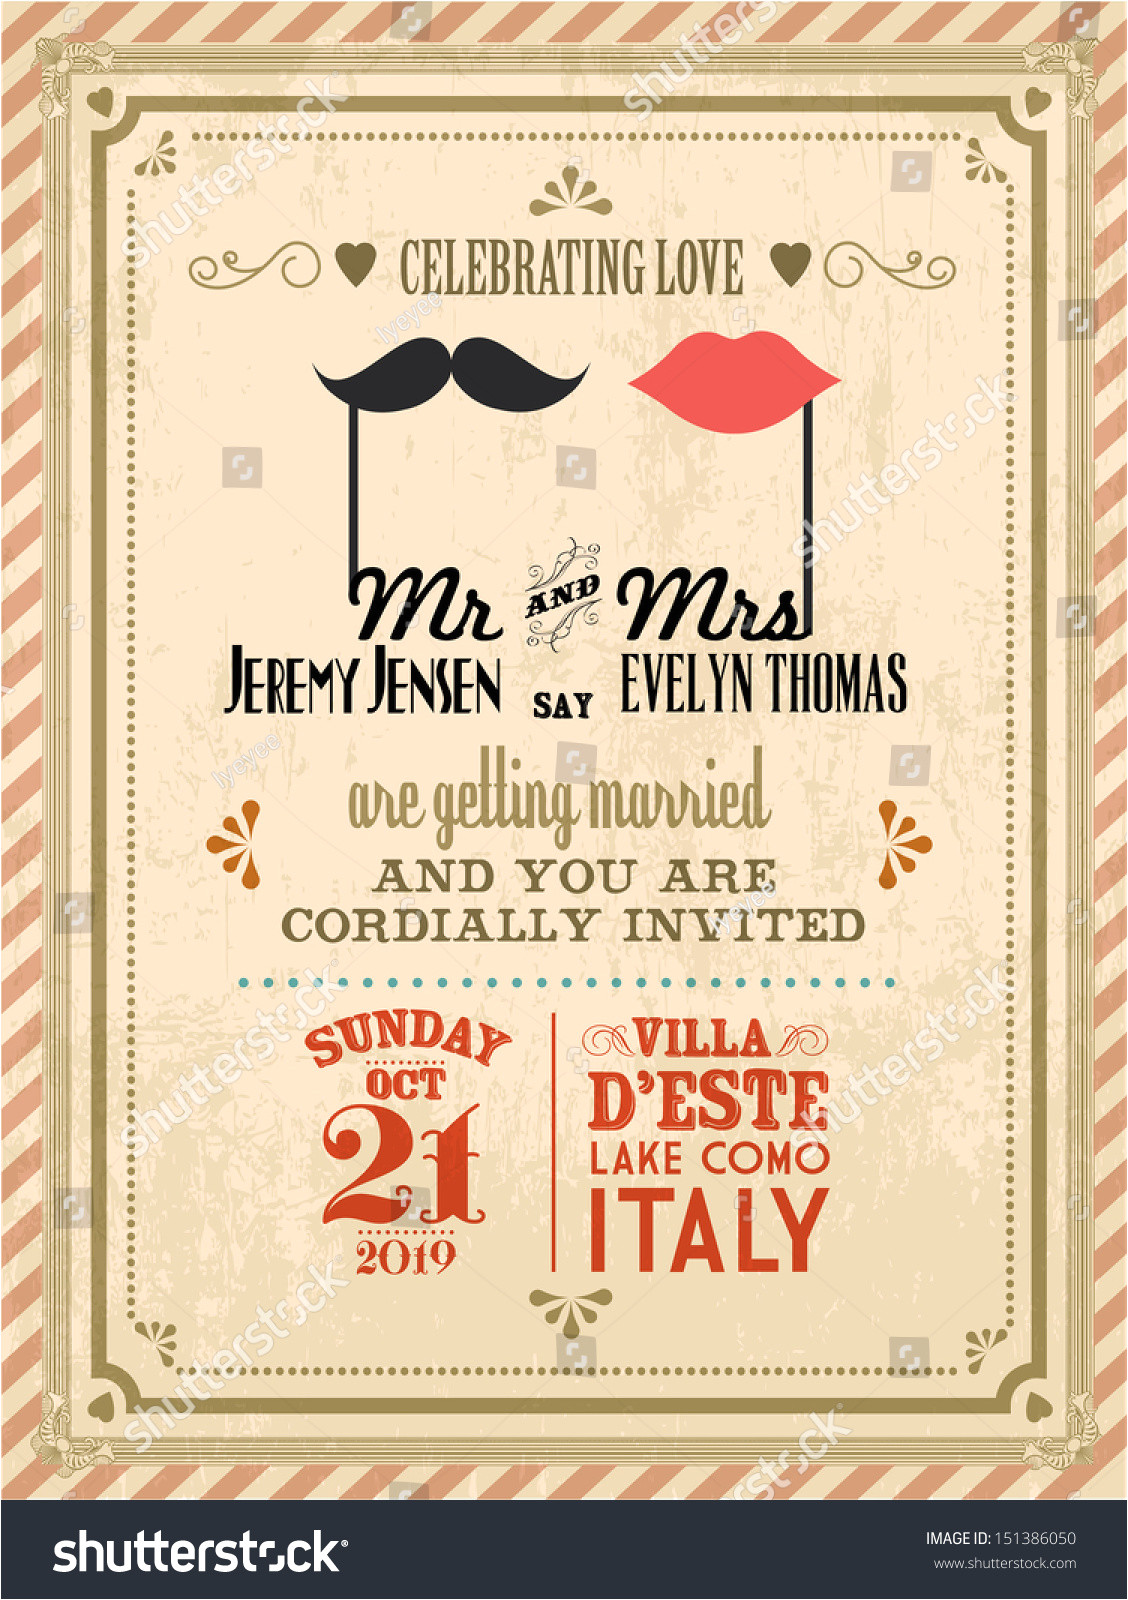 stock vector vintage wedding invitation card template vector illustration